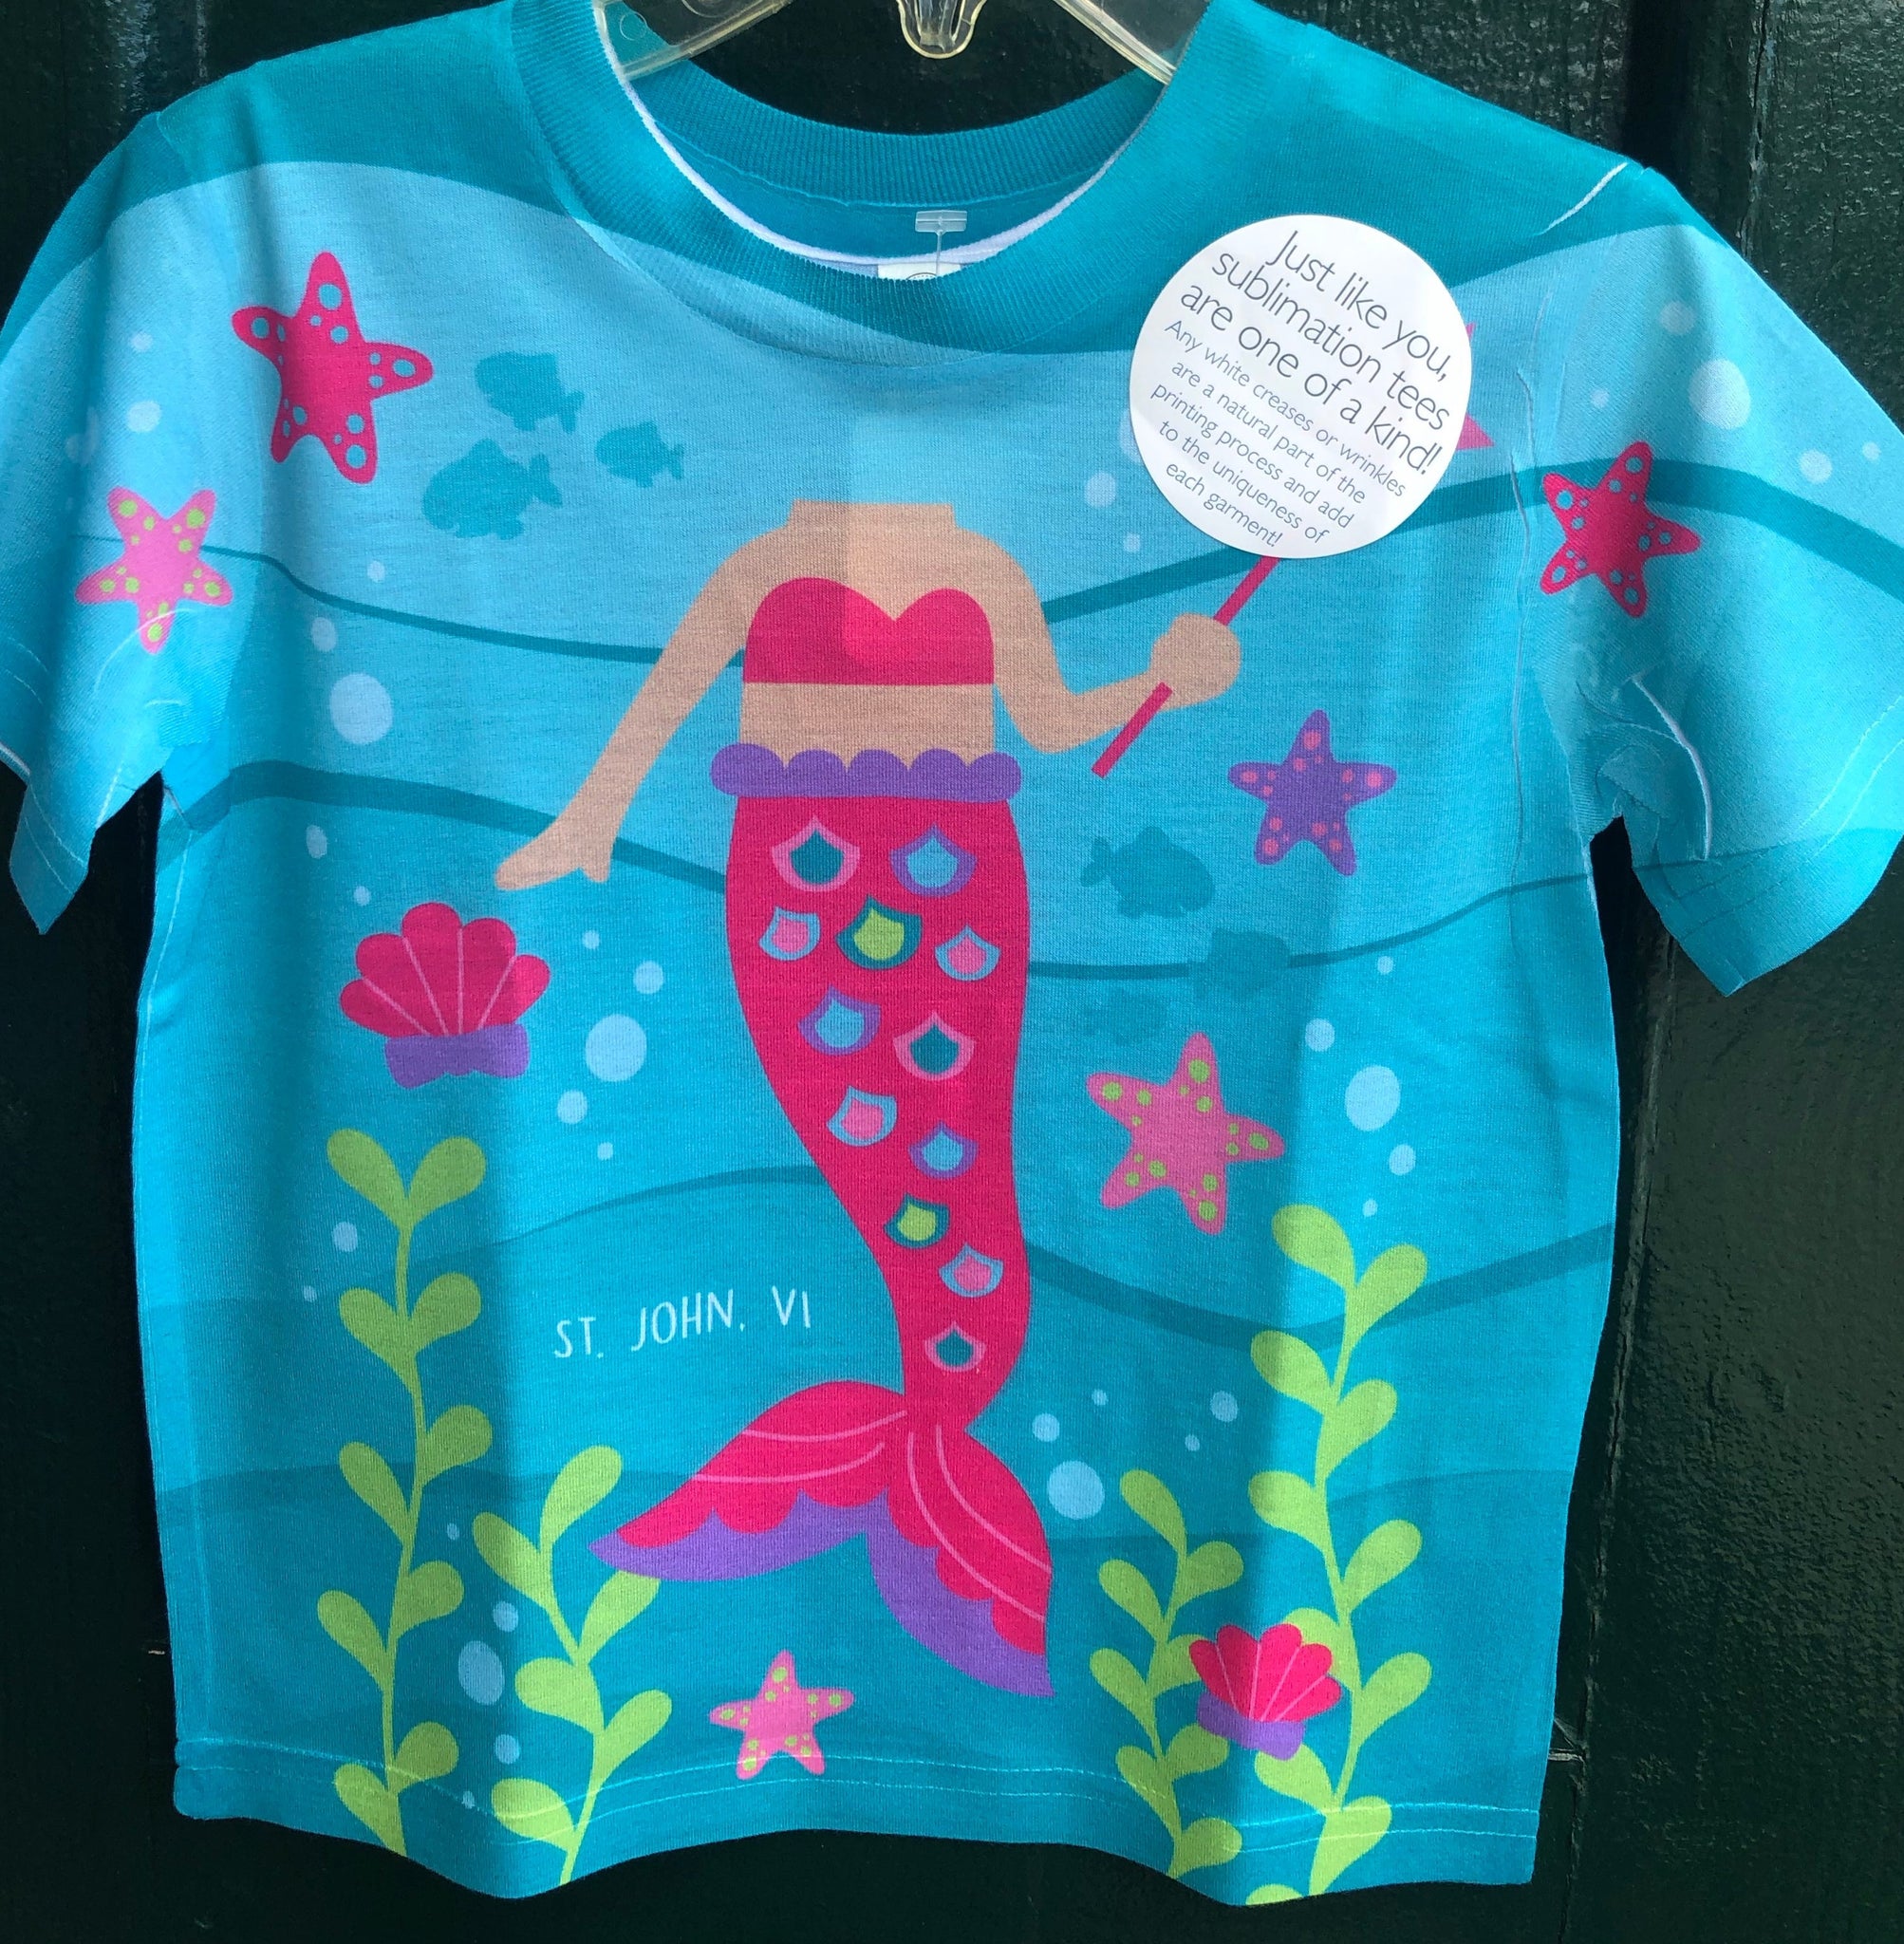 I'm a Mermaid Sublimation Printed Youth Tee Shirt